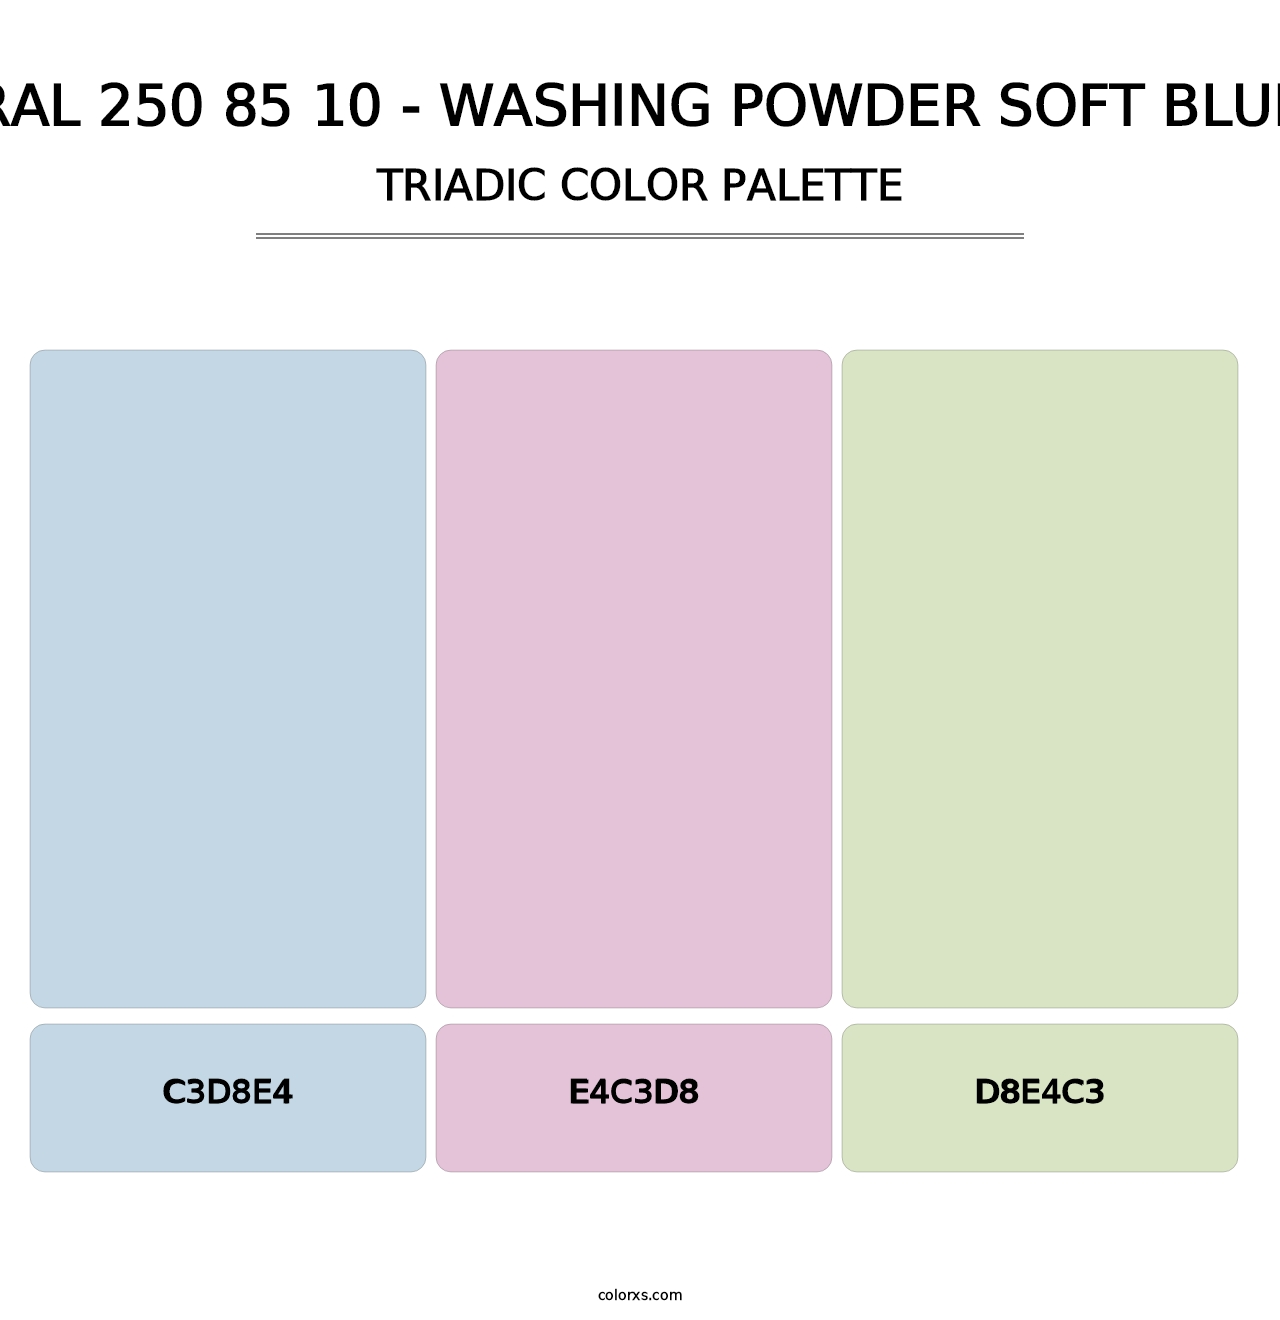 RAL 250 85 10 - Washing Powder Soft Blue - Triadic Color Palette